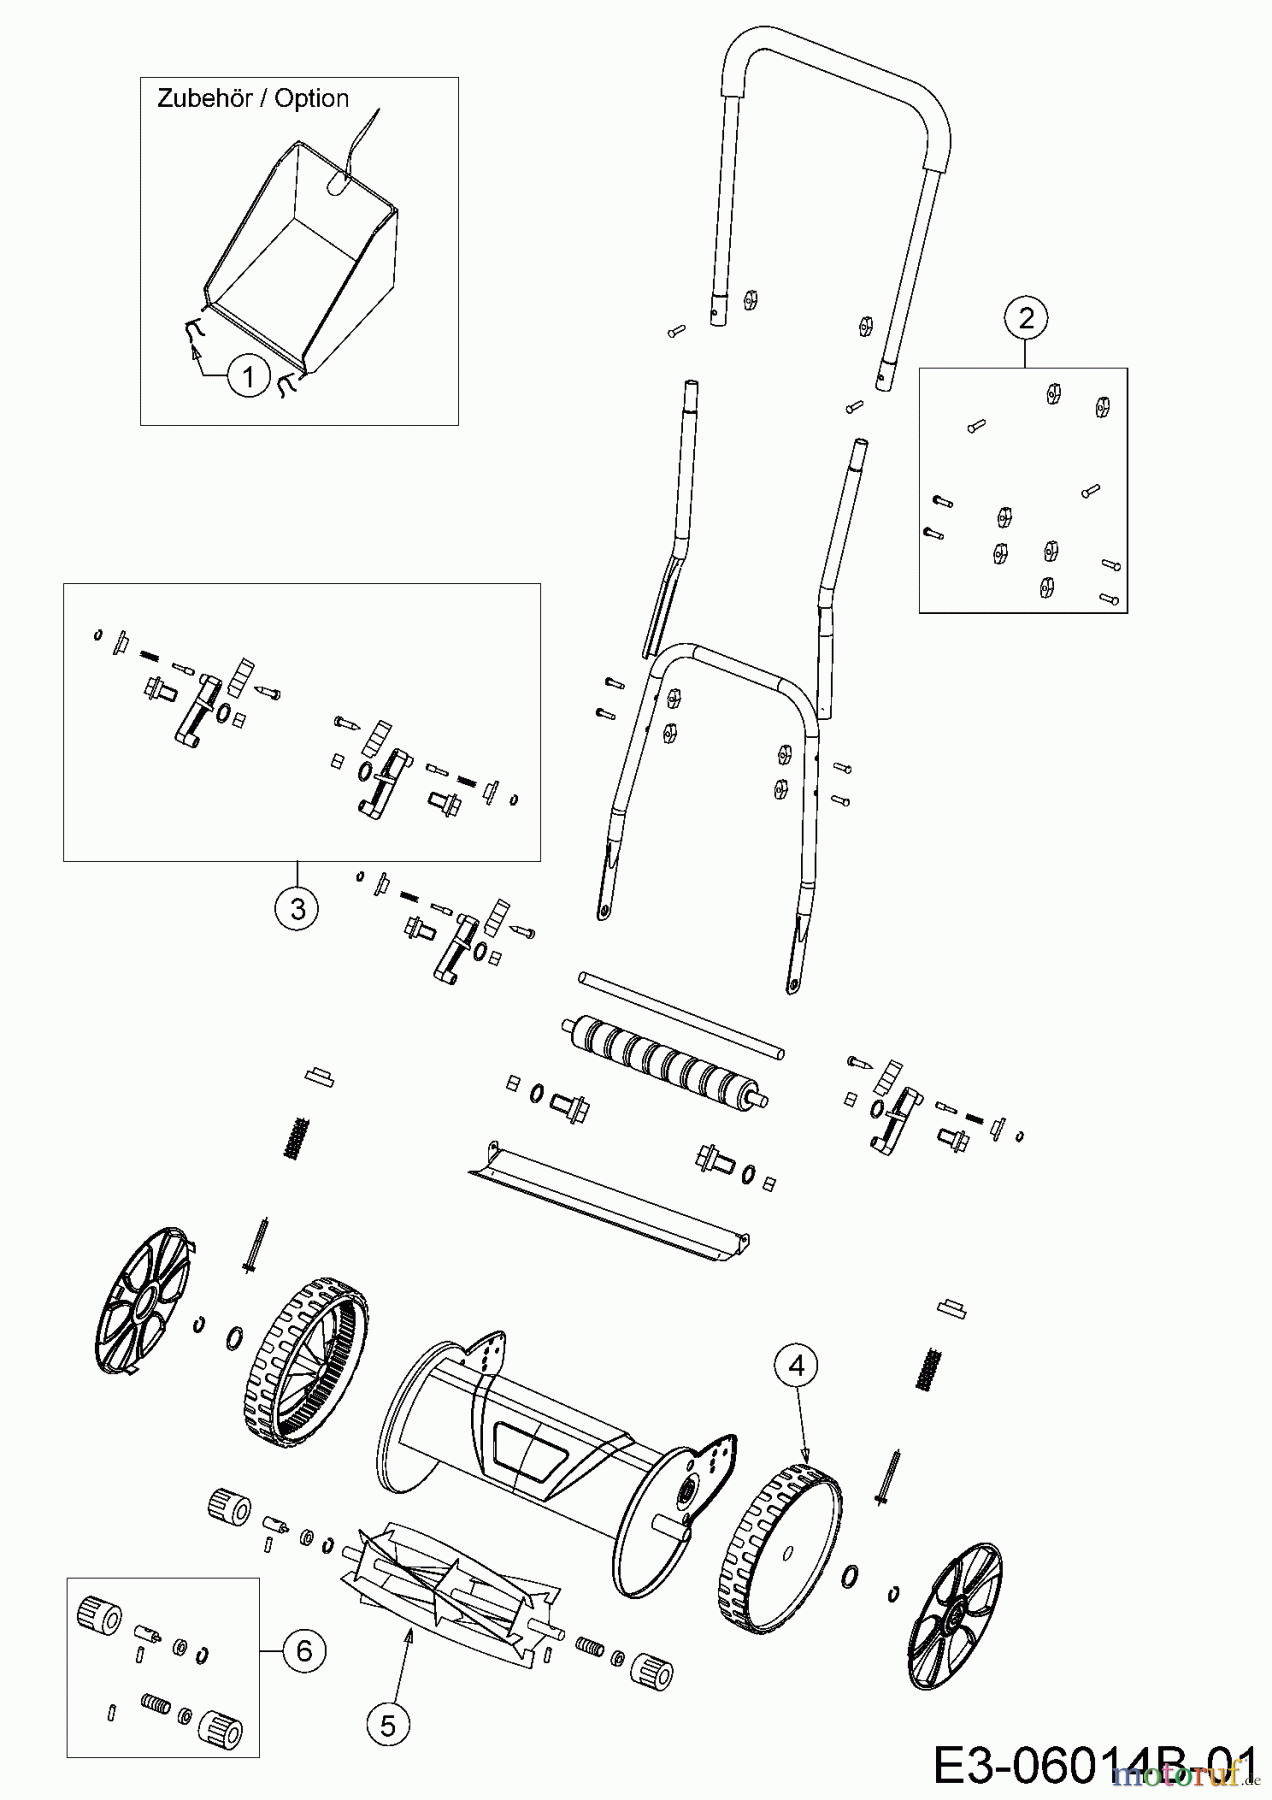  Wolf-Garten Spindle mower TT 350 S 15A-BA--650  (2016) Basic machine